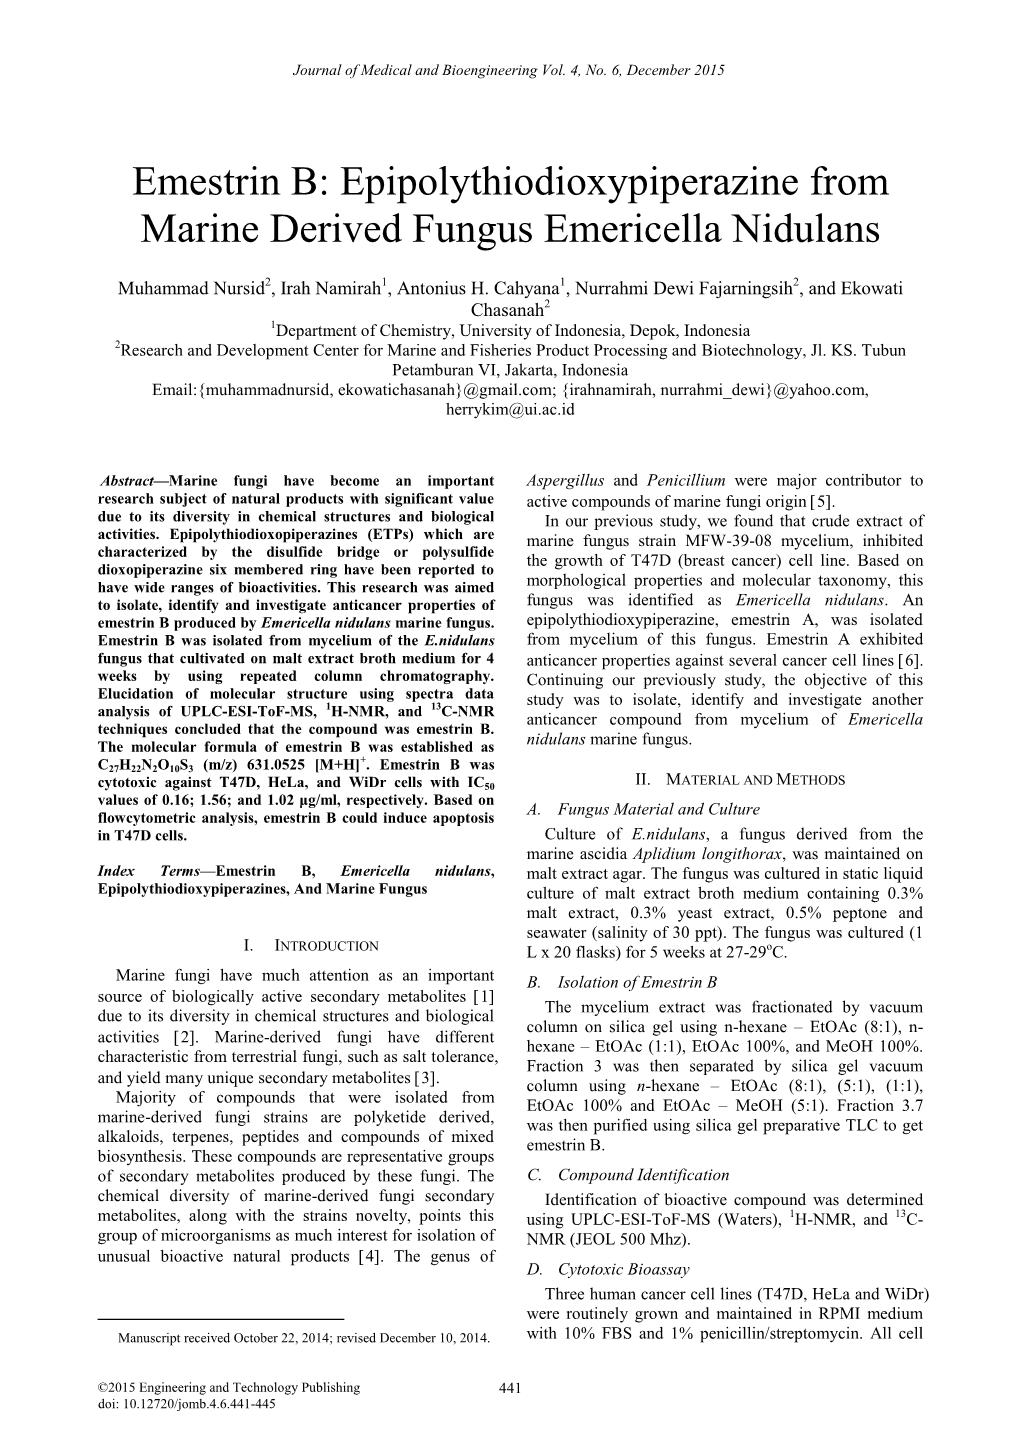 Emestrin B: Epipolythiodioxypiperazine from Marine Derived Fungus Emericella Nidulans